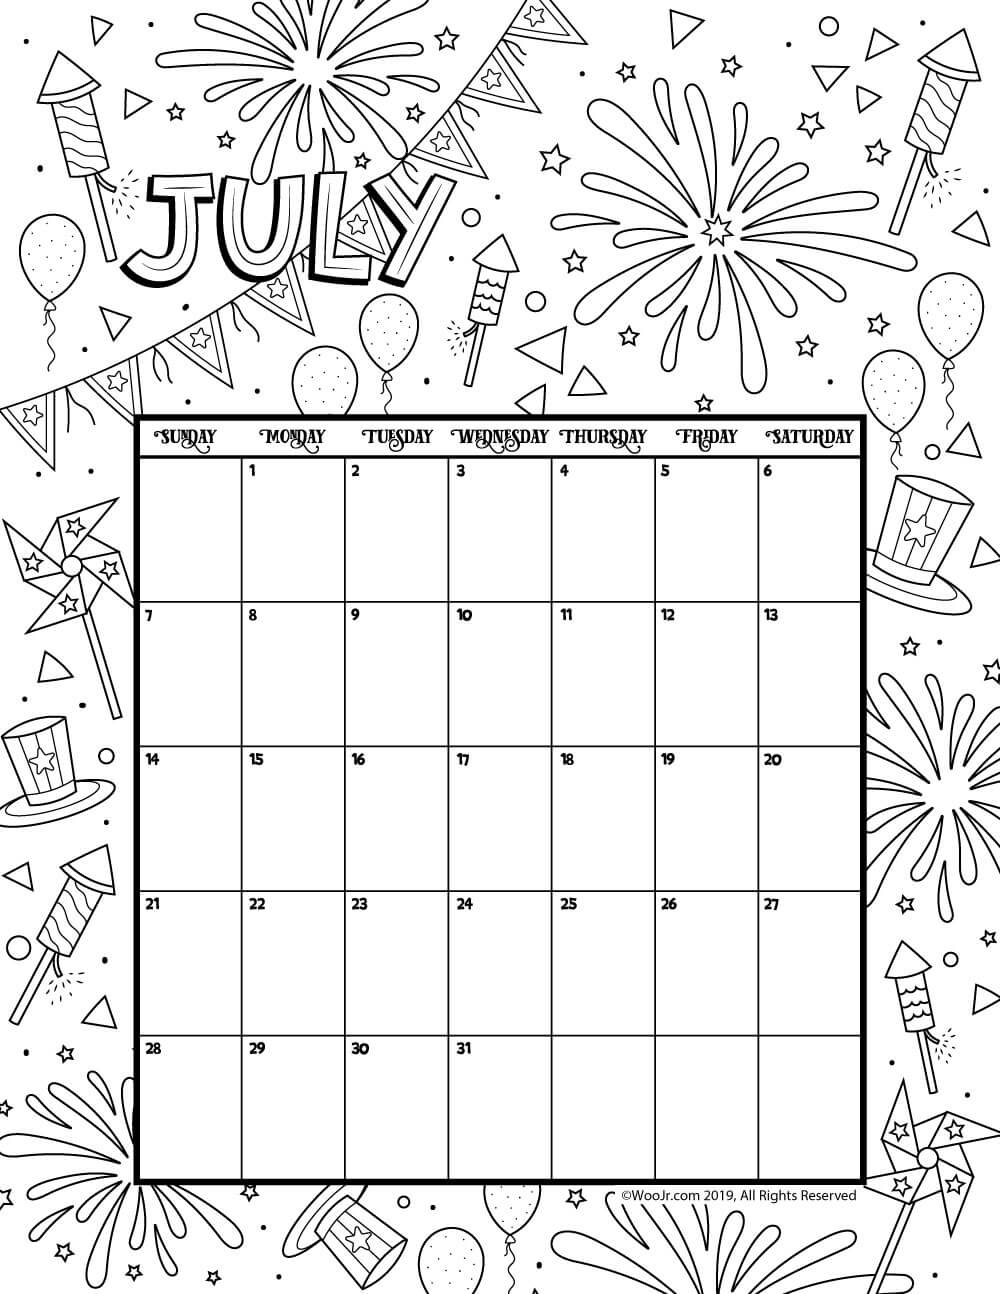 July 2019 Coloring Calendar